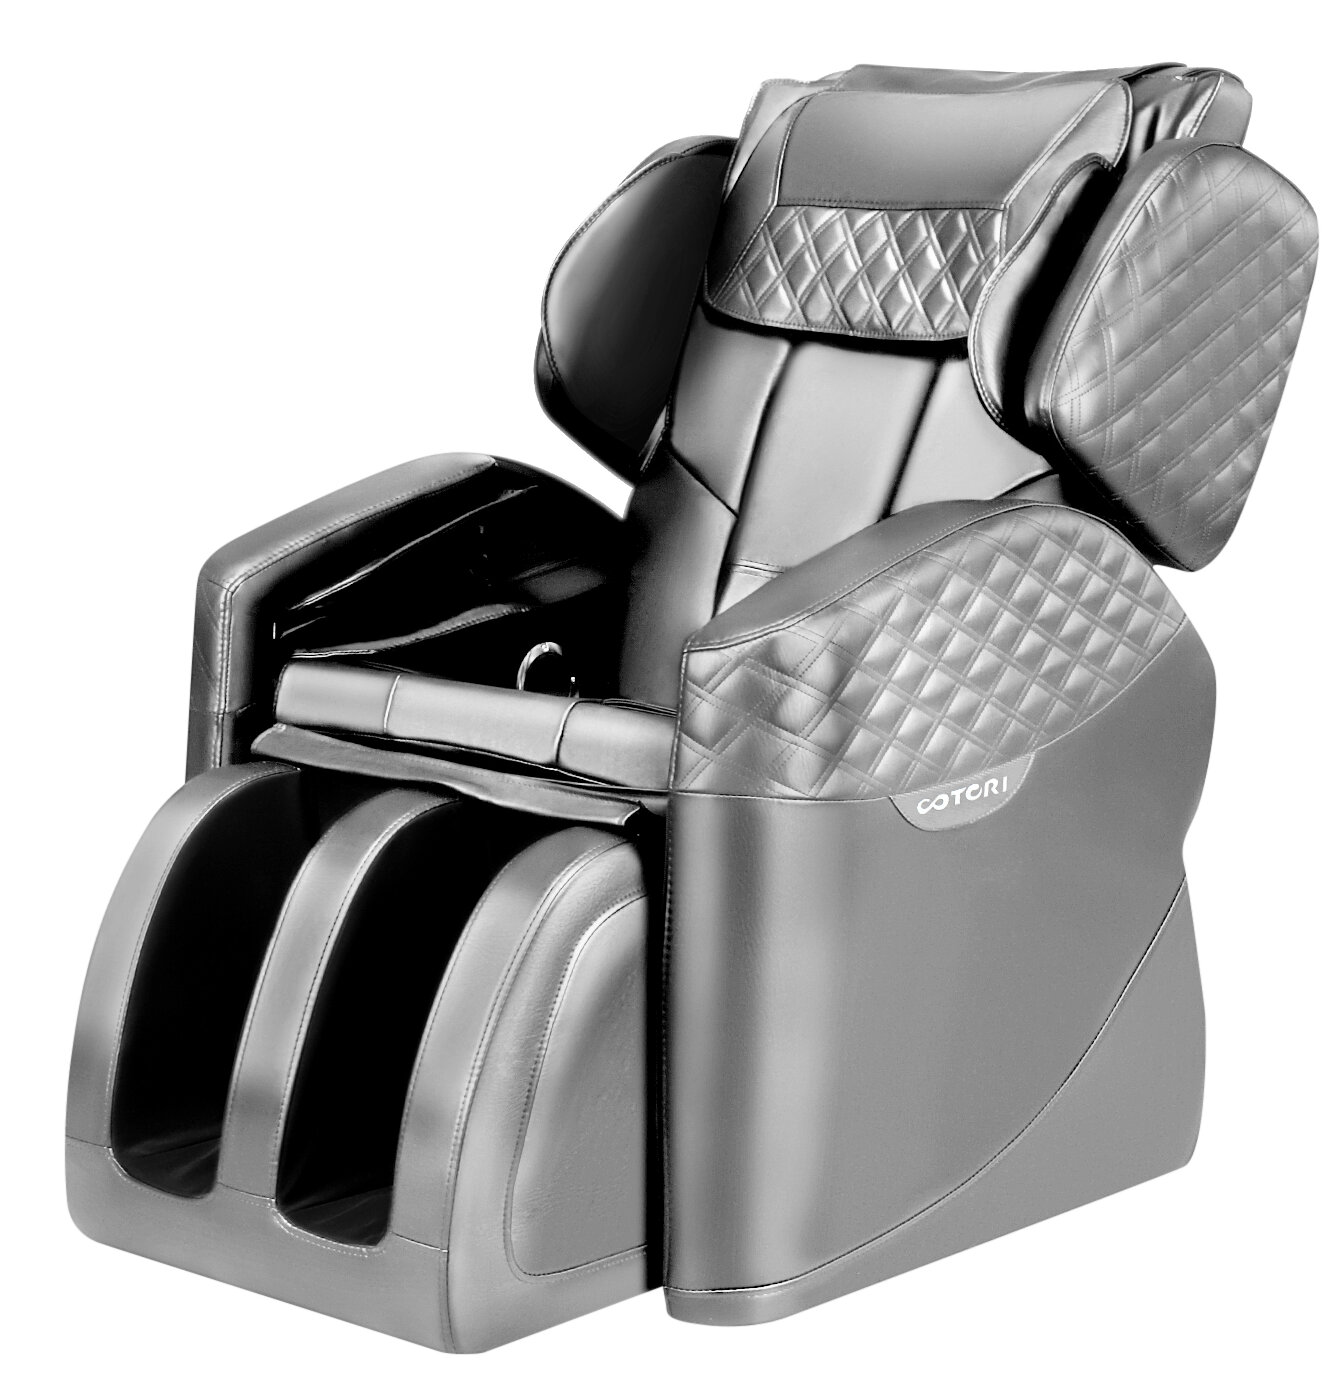 Ootori Massage Chairs Shiatsu Luxurious Electric Reclining Heated Full Body Massage Chair